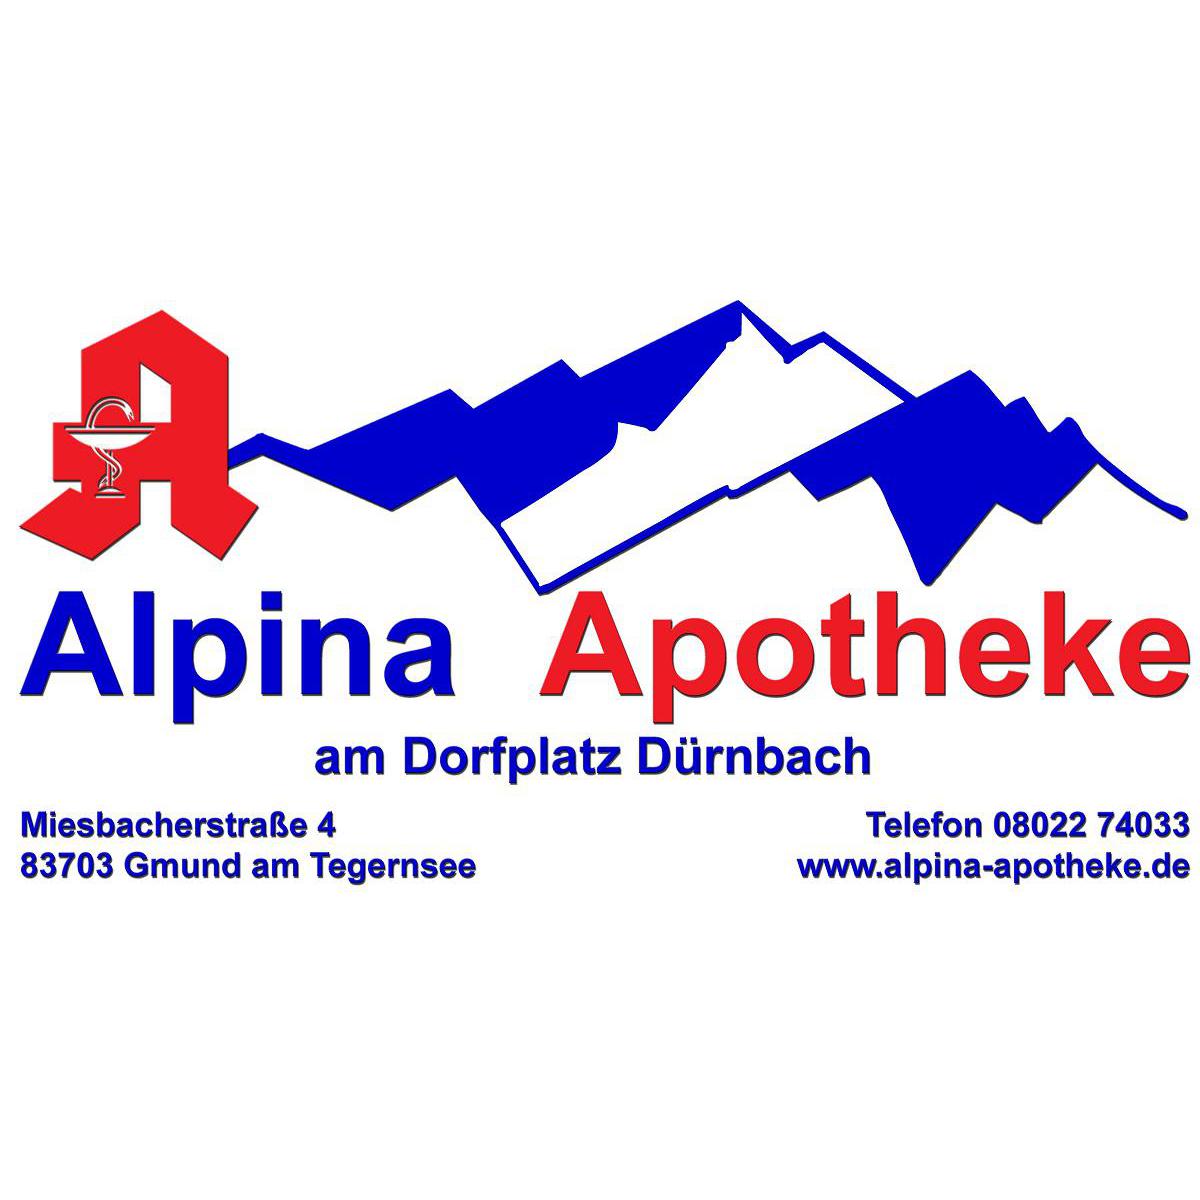 Alpina-Apotheke in Gmund am Tegernsee - Logo